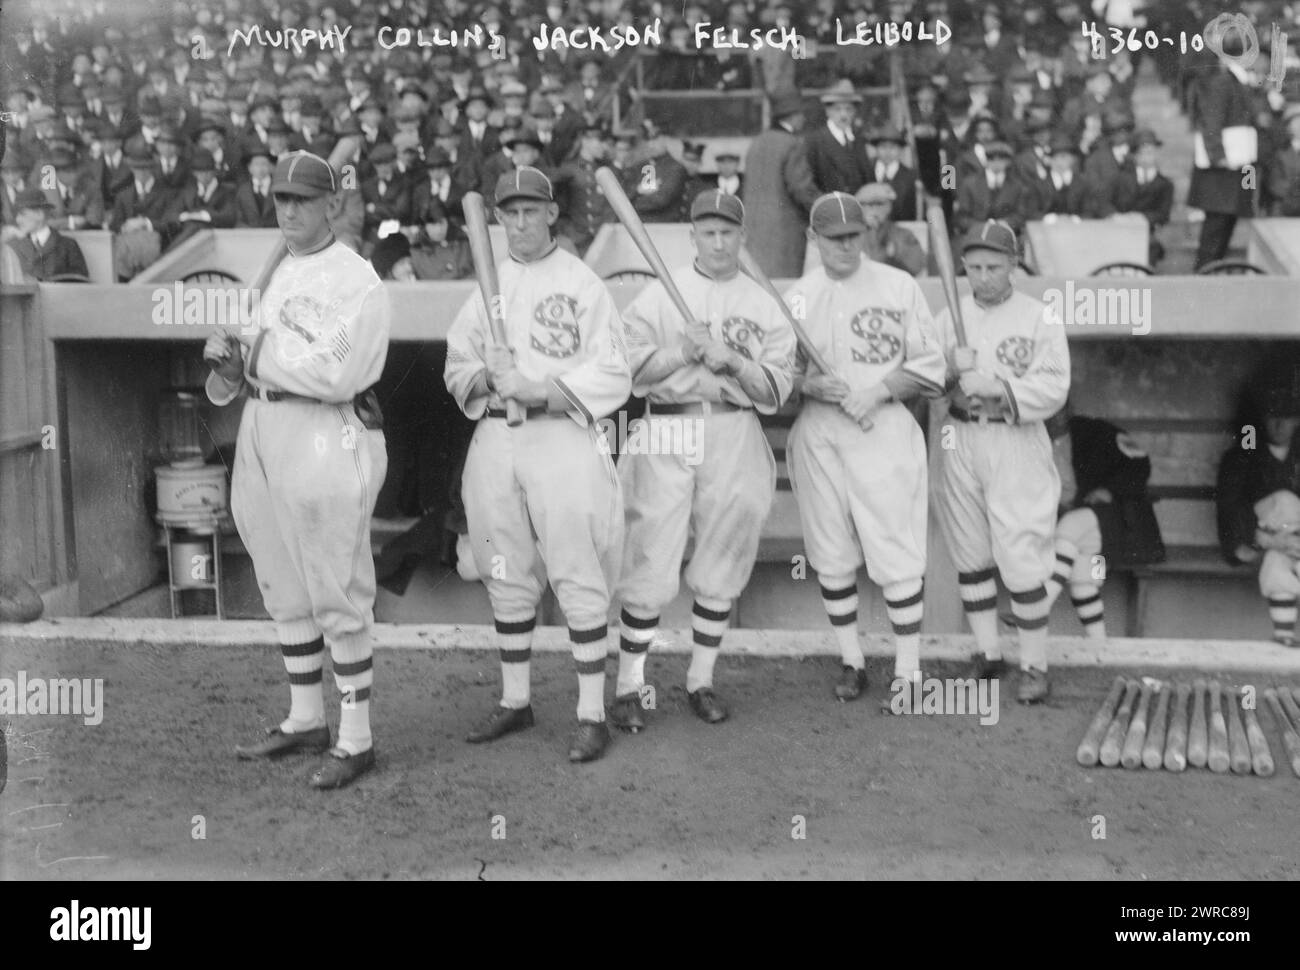 Eddie Murphy, John 'Shano' Collins, Joe Jackson, Happy Felsch, and Nemo Leibold, Chicago AL at 1917 World Series (baseball), 1917, Glass negatives, 1 negative: glass Stock Photo